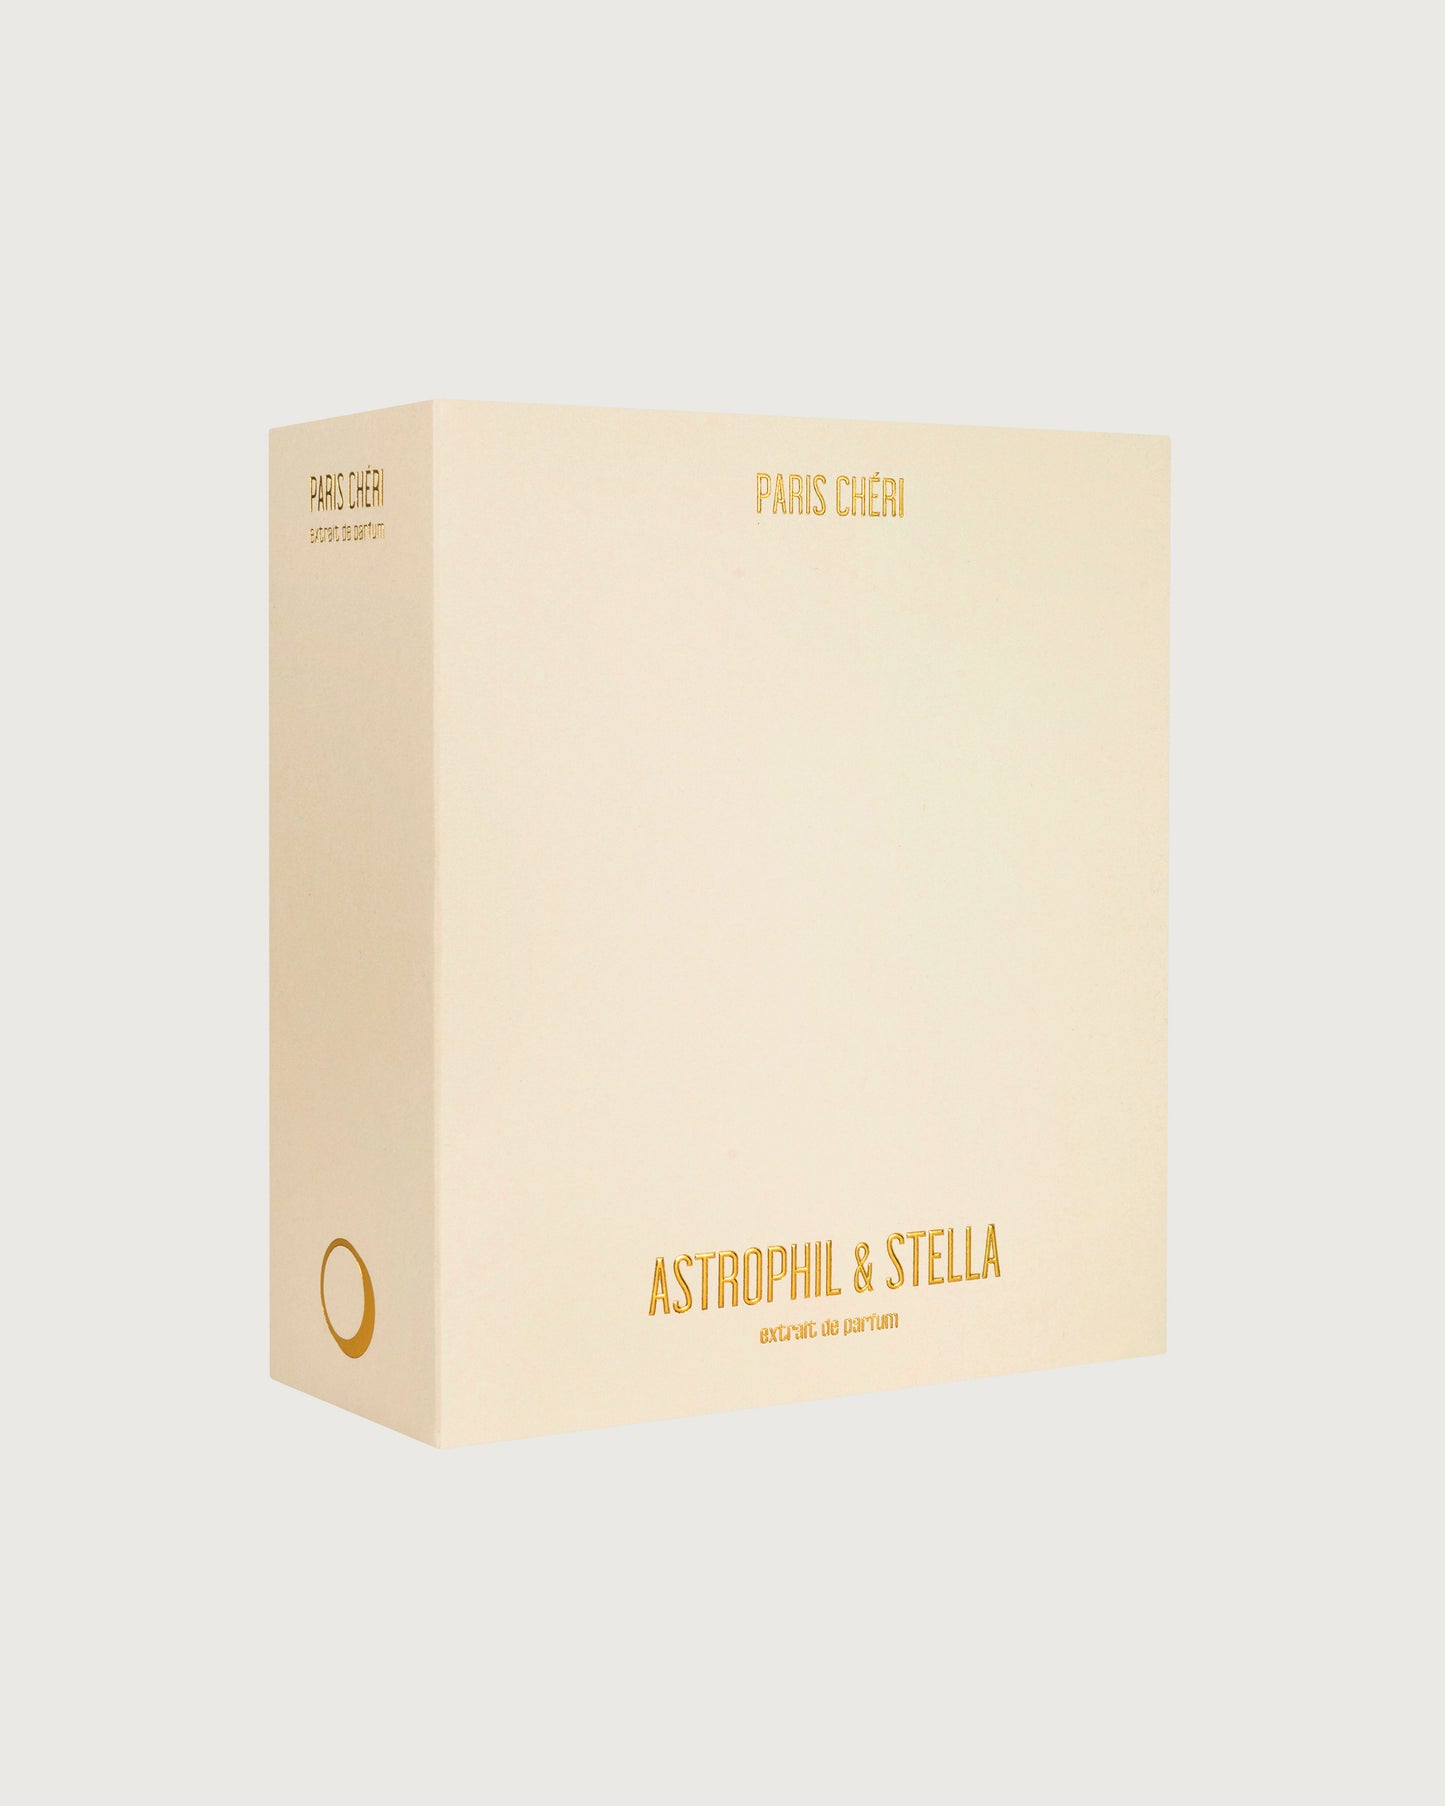 Paris Cheri Astrophil & Stella Extrait de Parfum 50ml